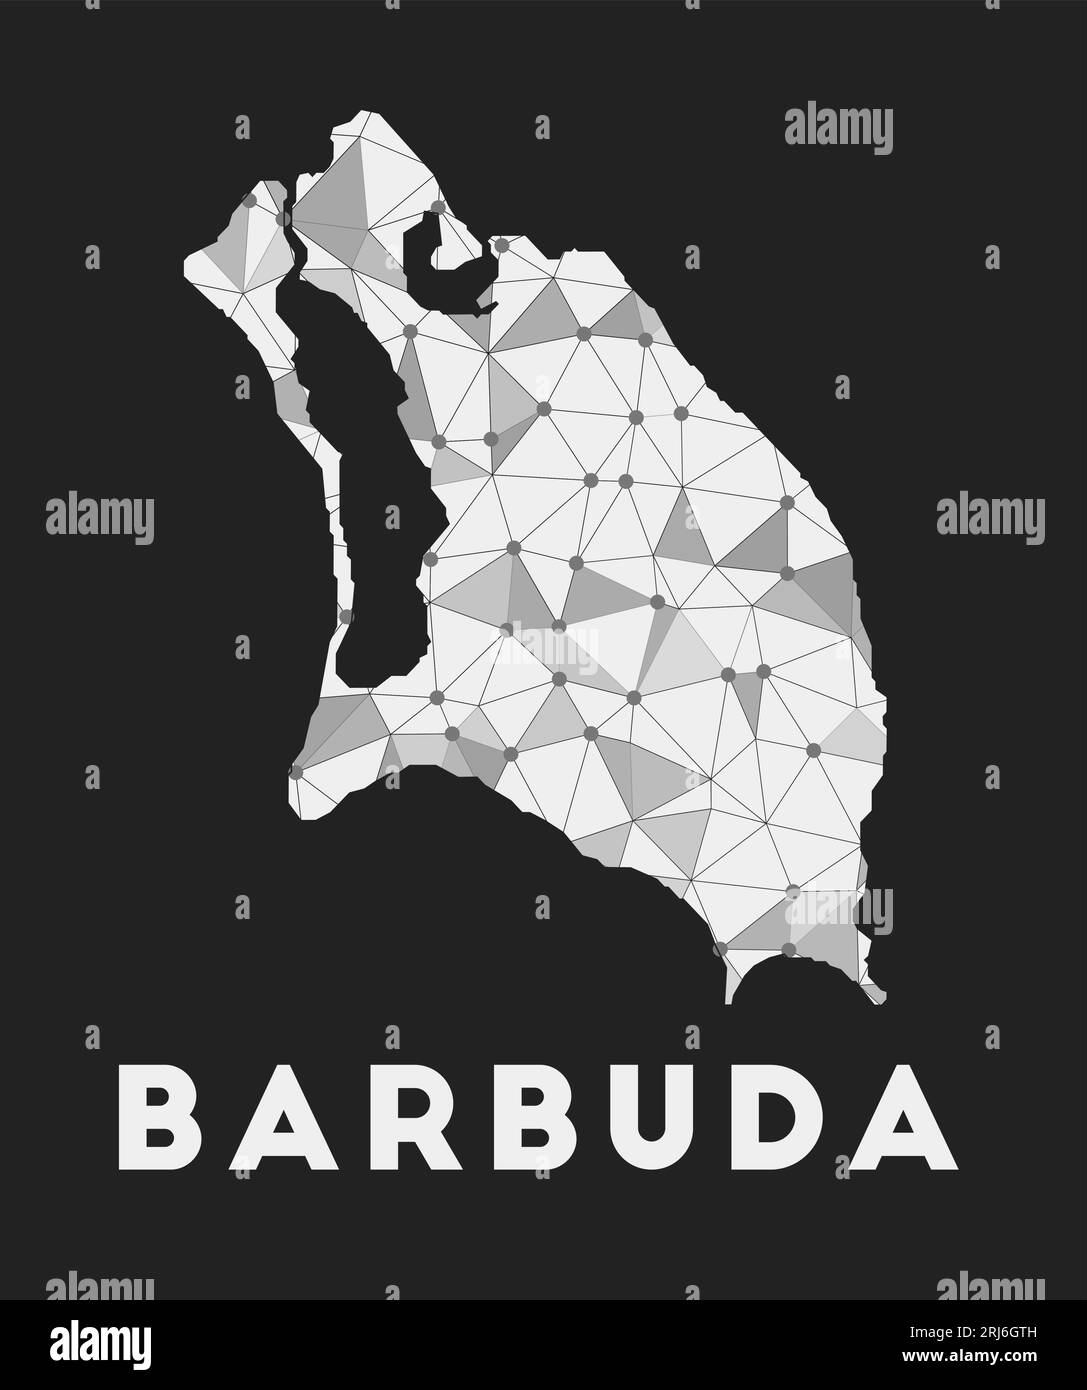 Barbuda - communication network map of island. Barbuda trendy geometric design on dark background. Technology, internet, network, telecommunication co Stock Vector